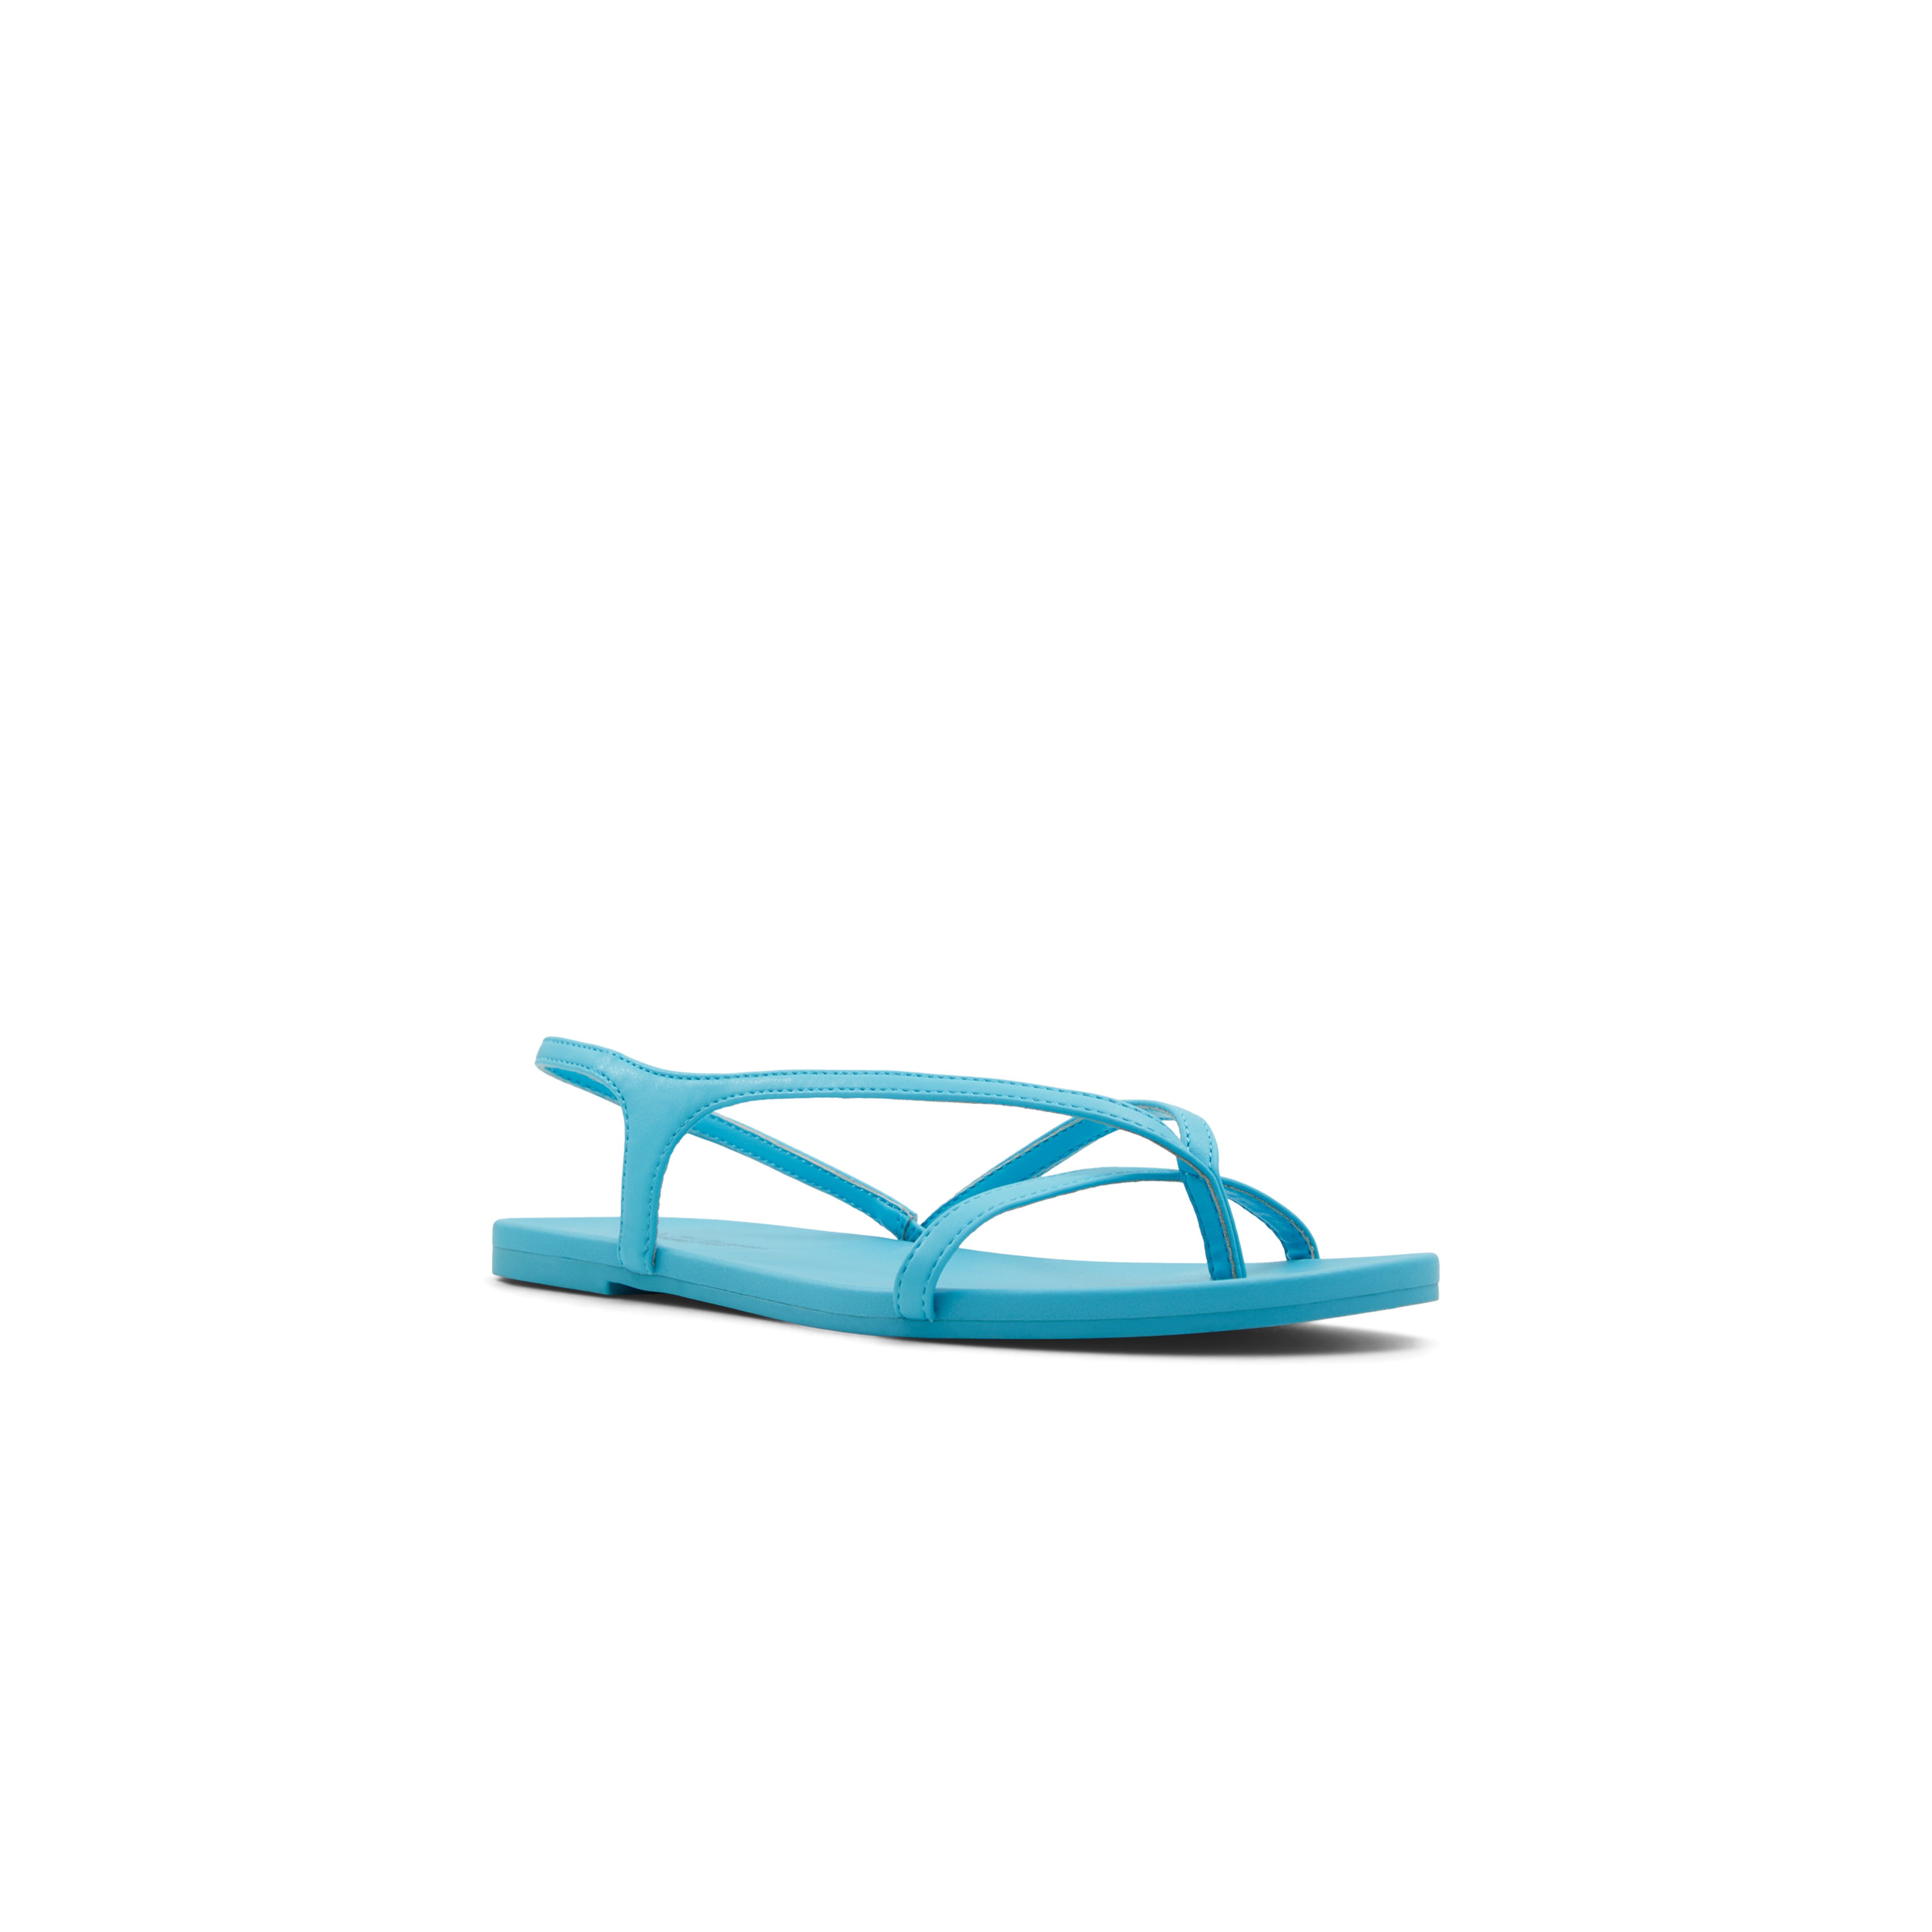 Montebello Women's Blue Flat Sandals image number 4